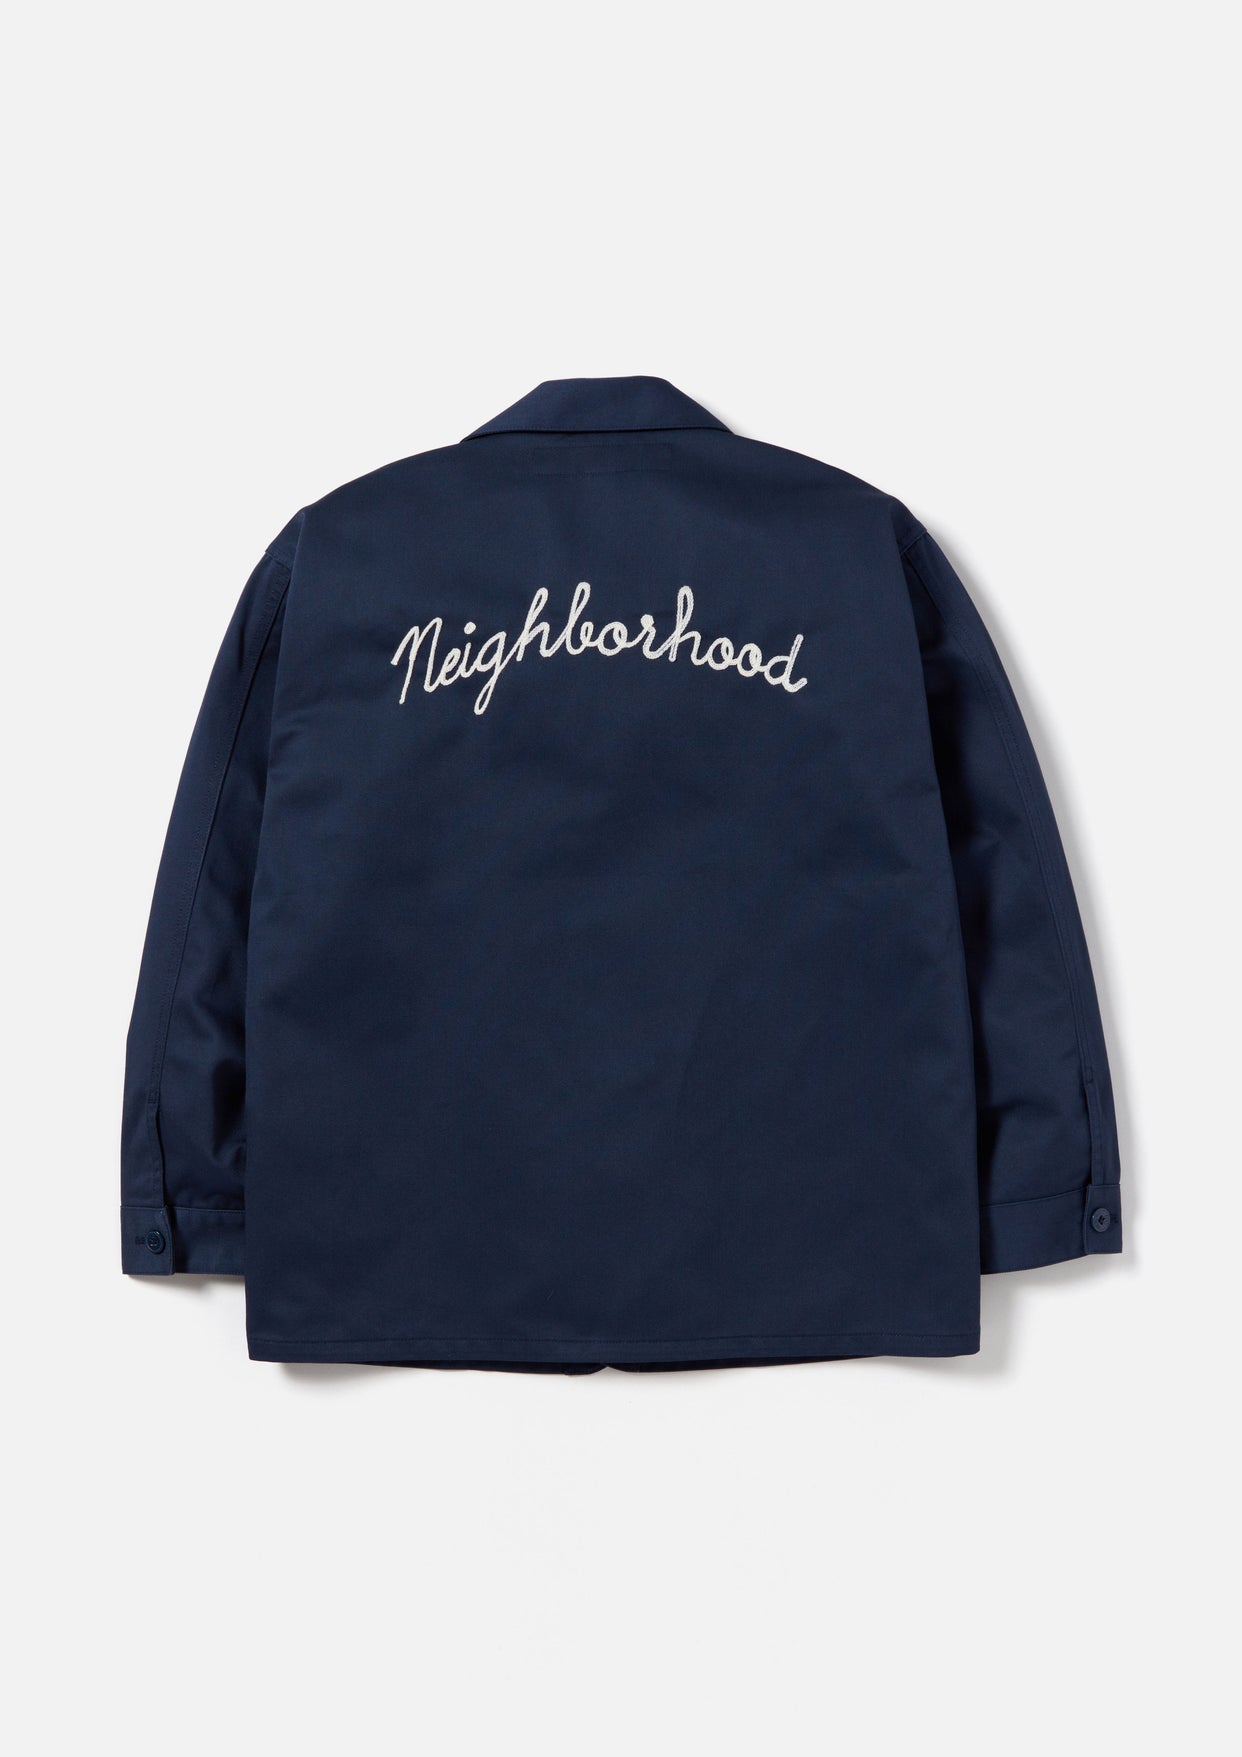 NEIGHBORHOOD DICKIES Coverall Jacket 紺 L